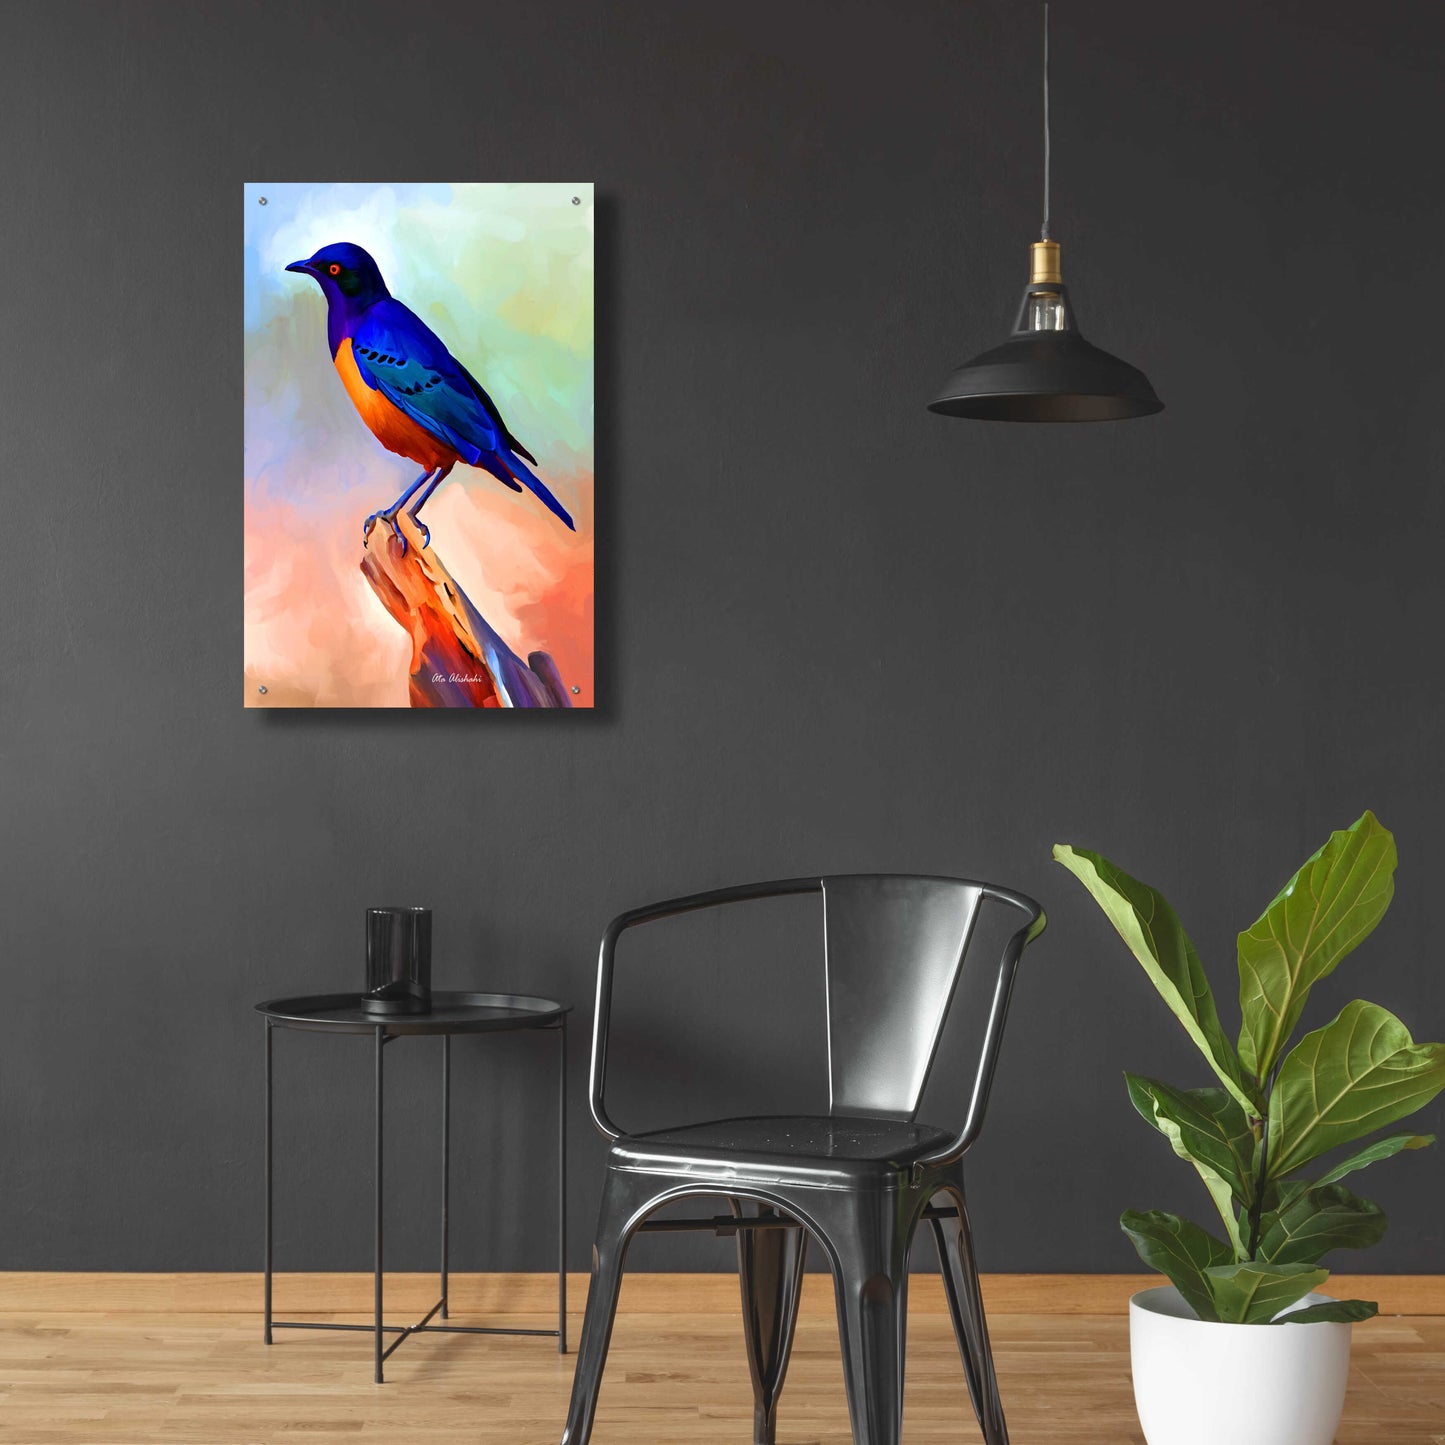 Epic Art 'Bird' by Ata Alishahi, Acrylic Glass Wall Art,24x36